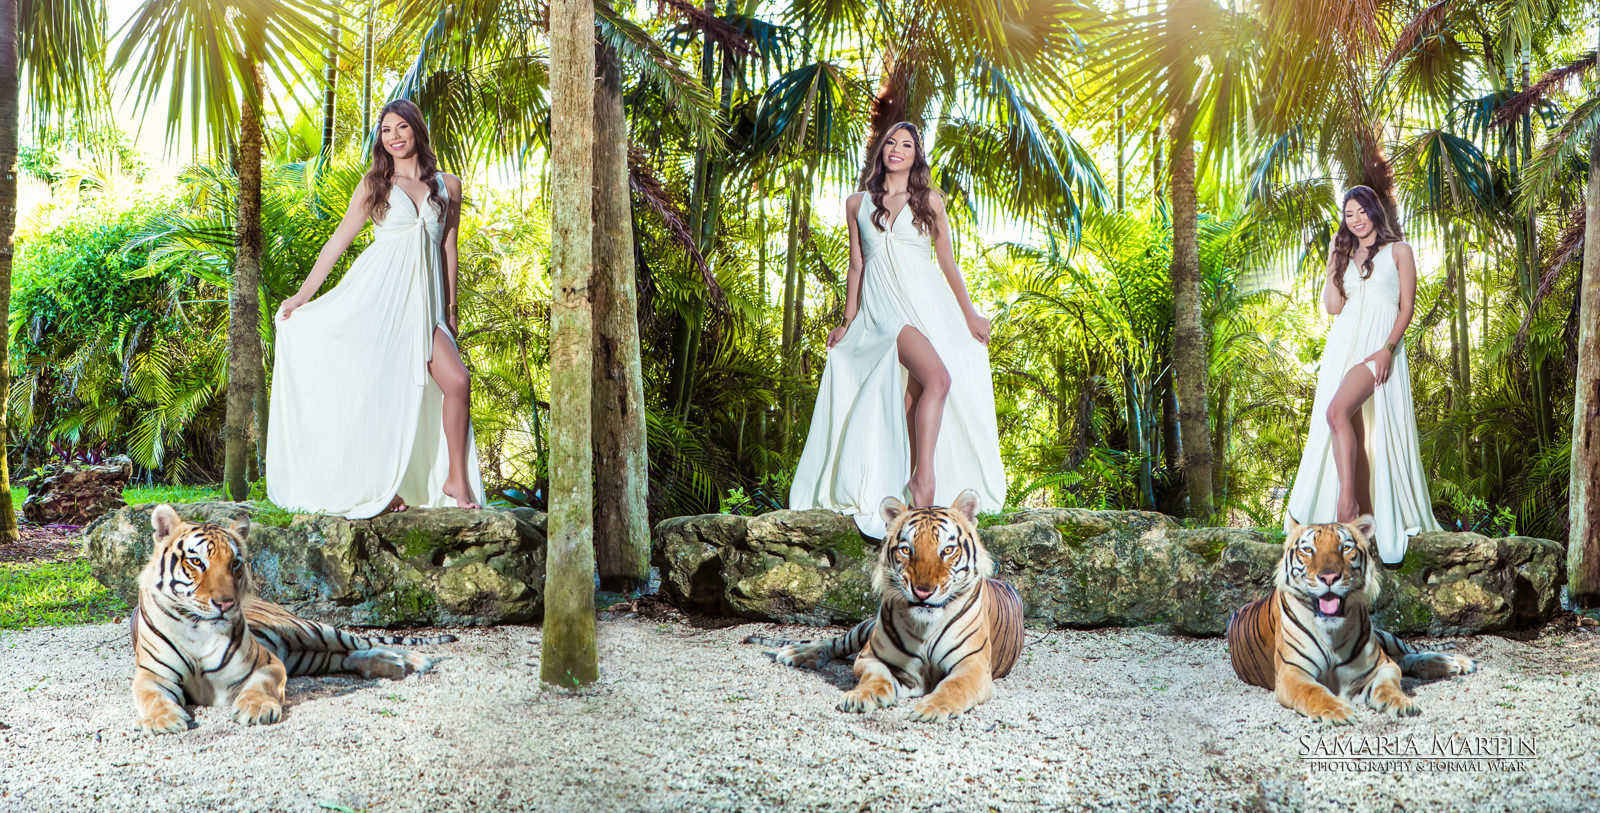 photo with a tiger miami, tiger photo , where to rent a tiger, fotos con tigre miami